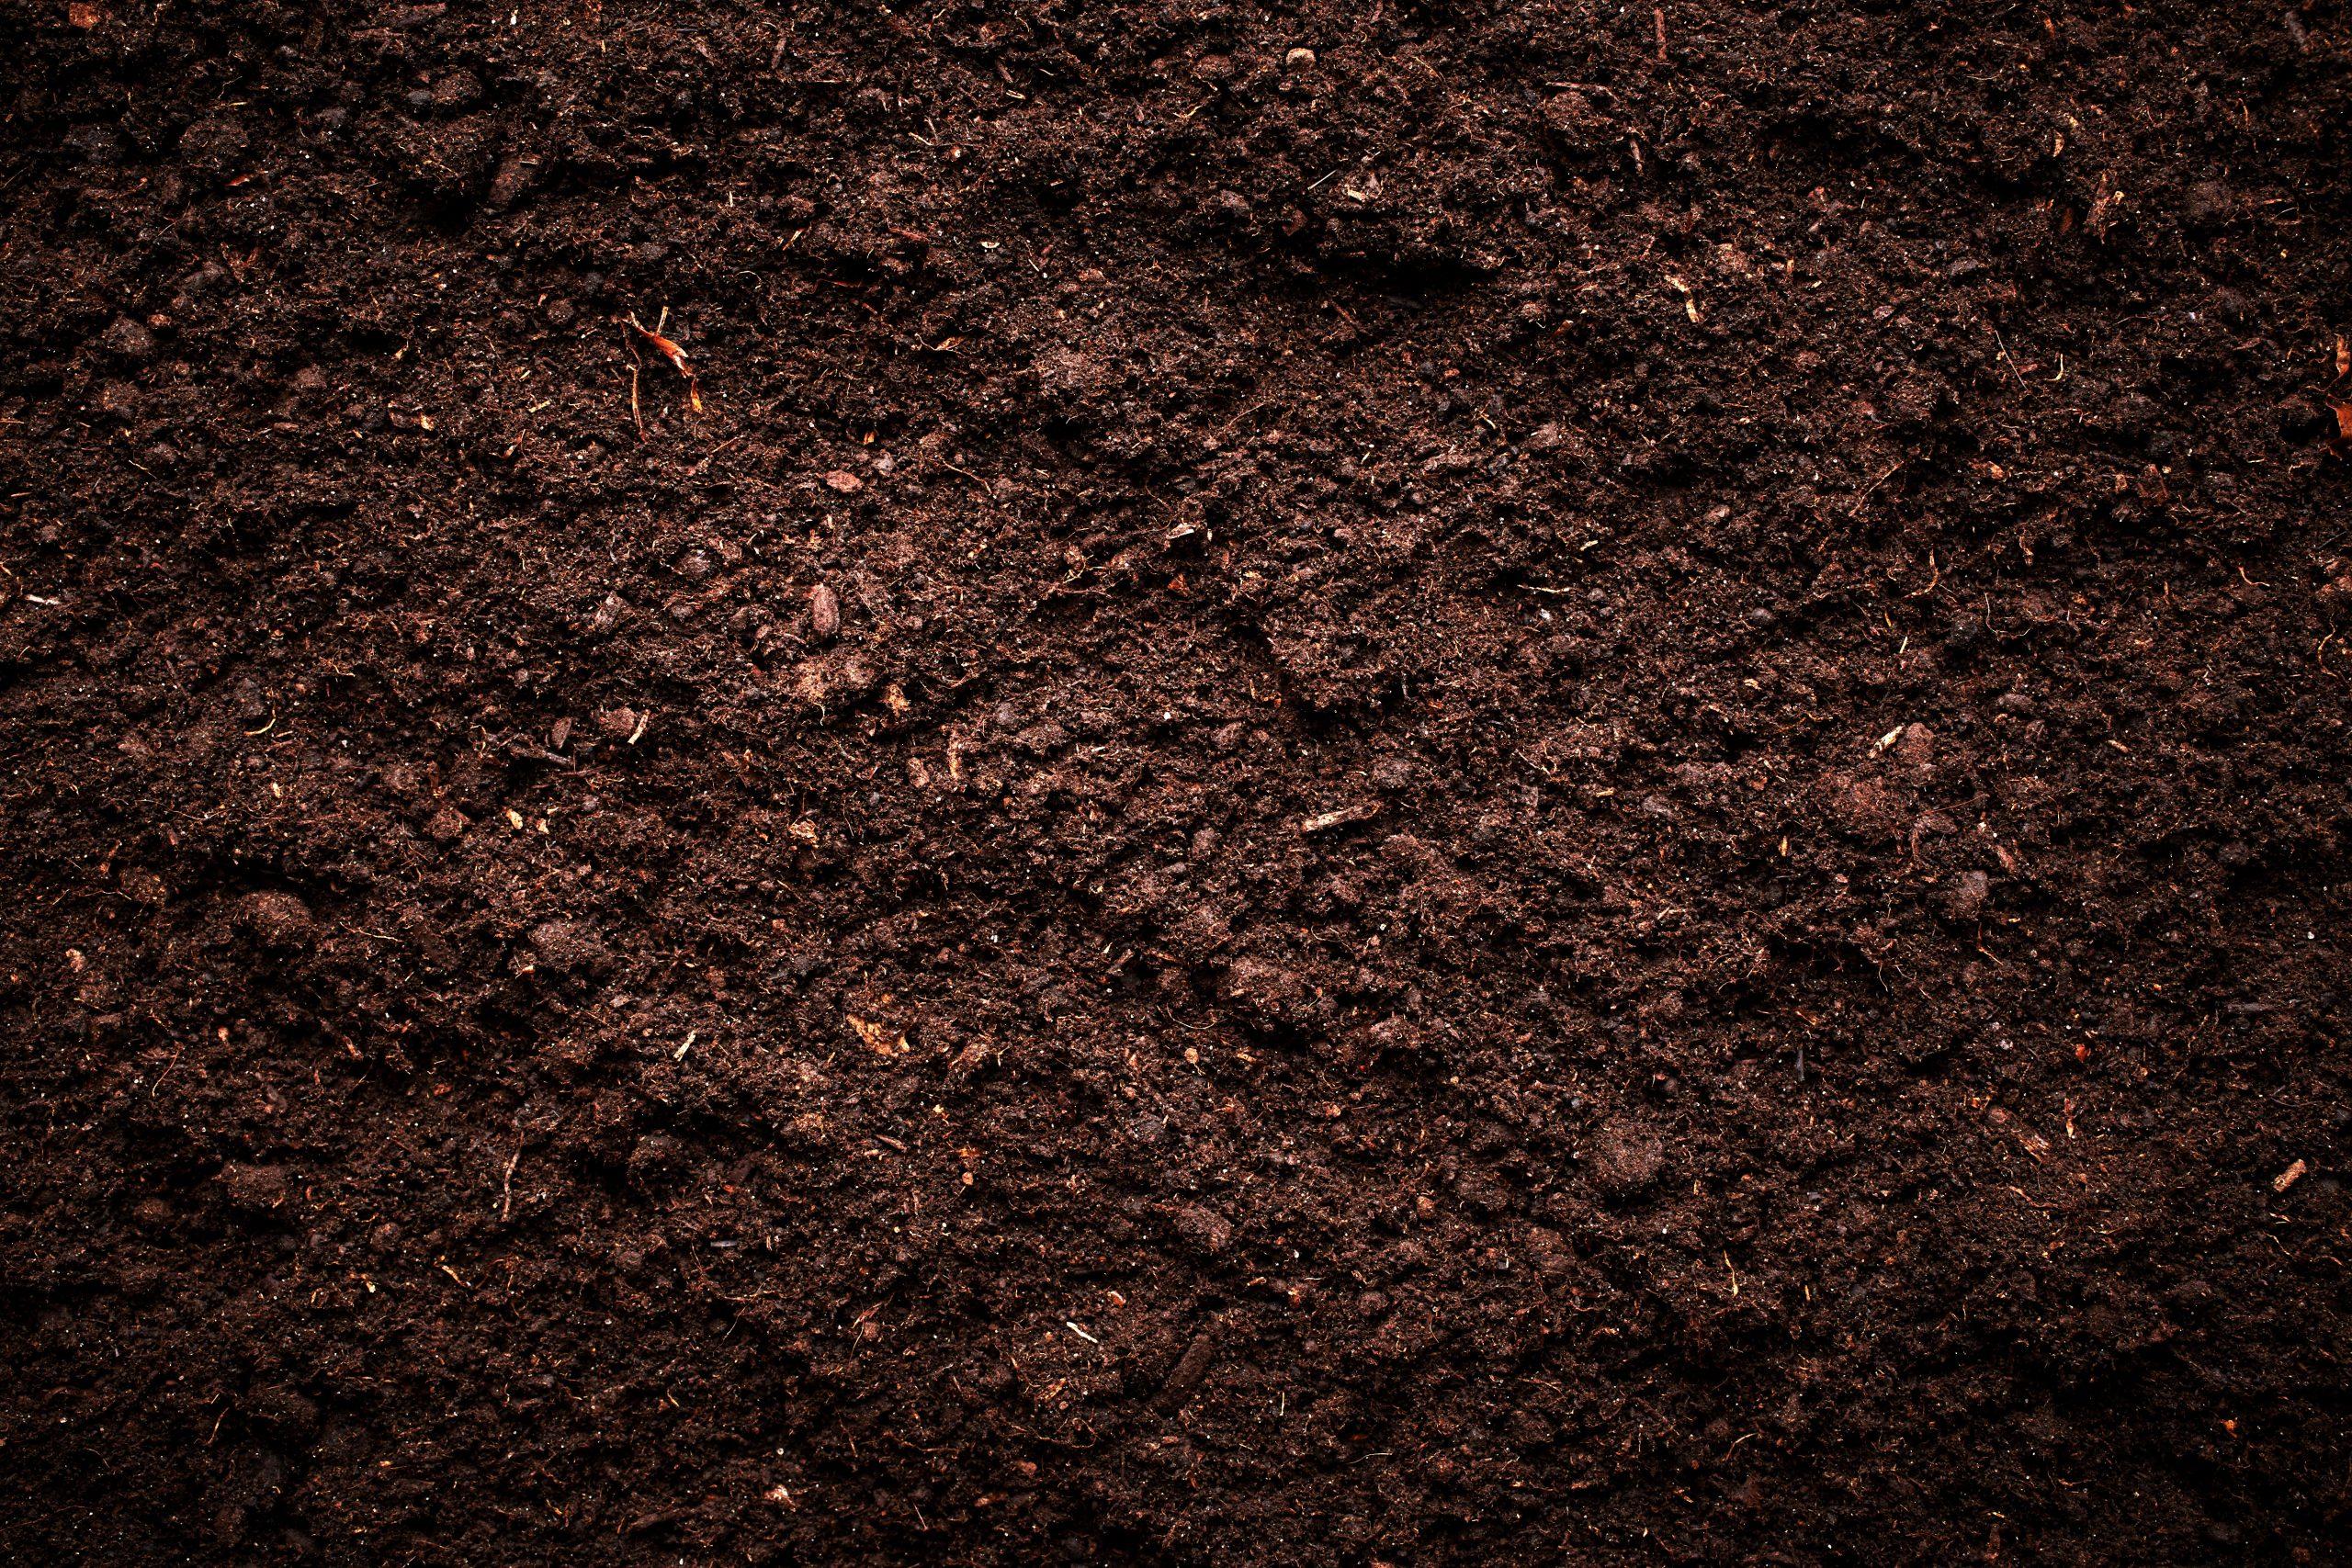 Aerial view of soil